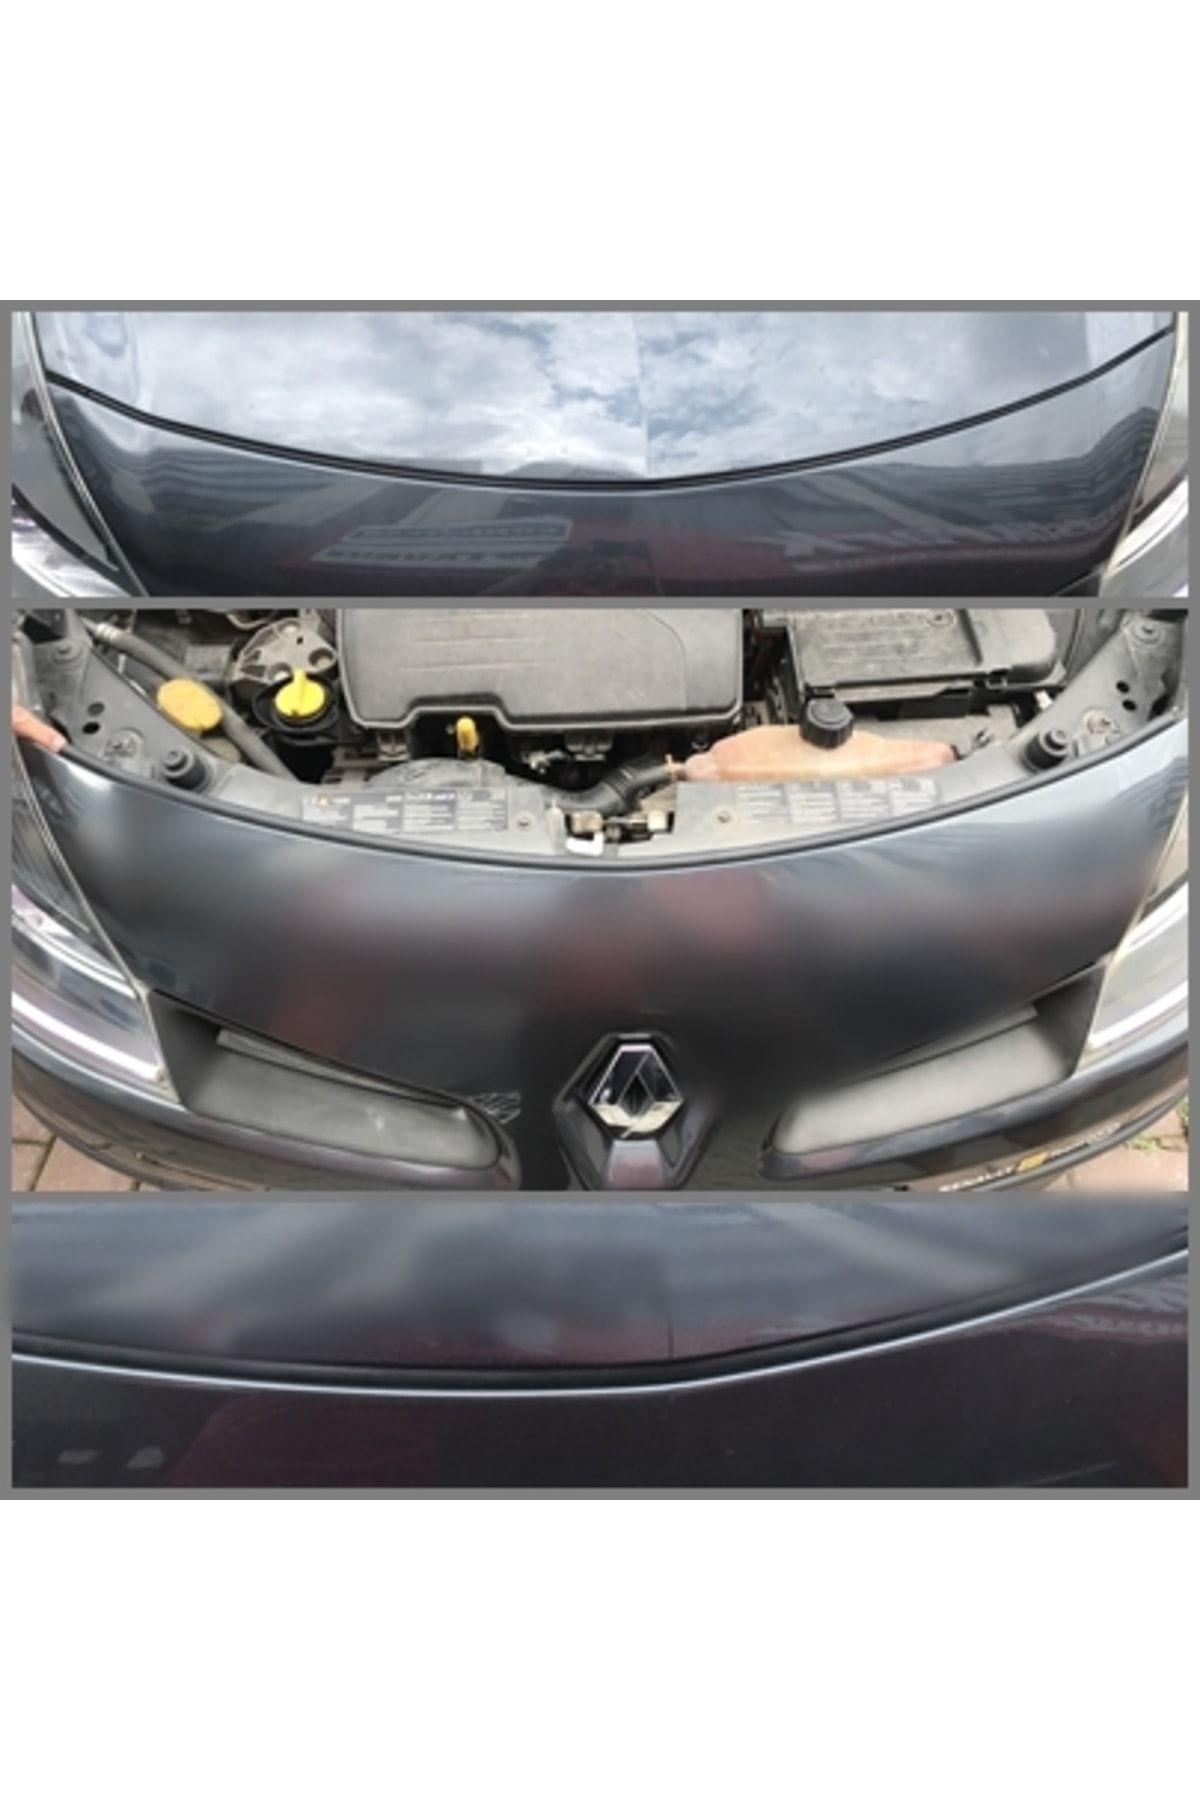 Güçlas Renault Clio Iıı Motor Kaput Fitili & Clio 3 Kaput Sızdırmazlık